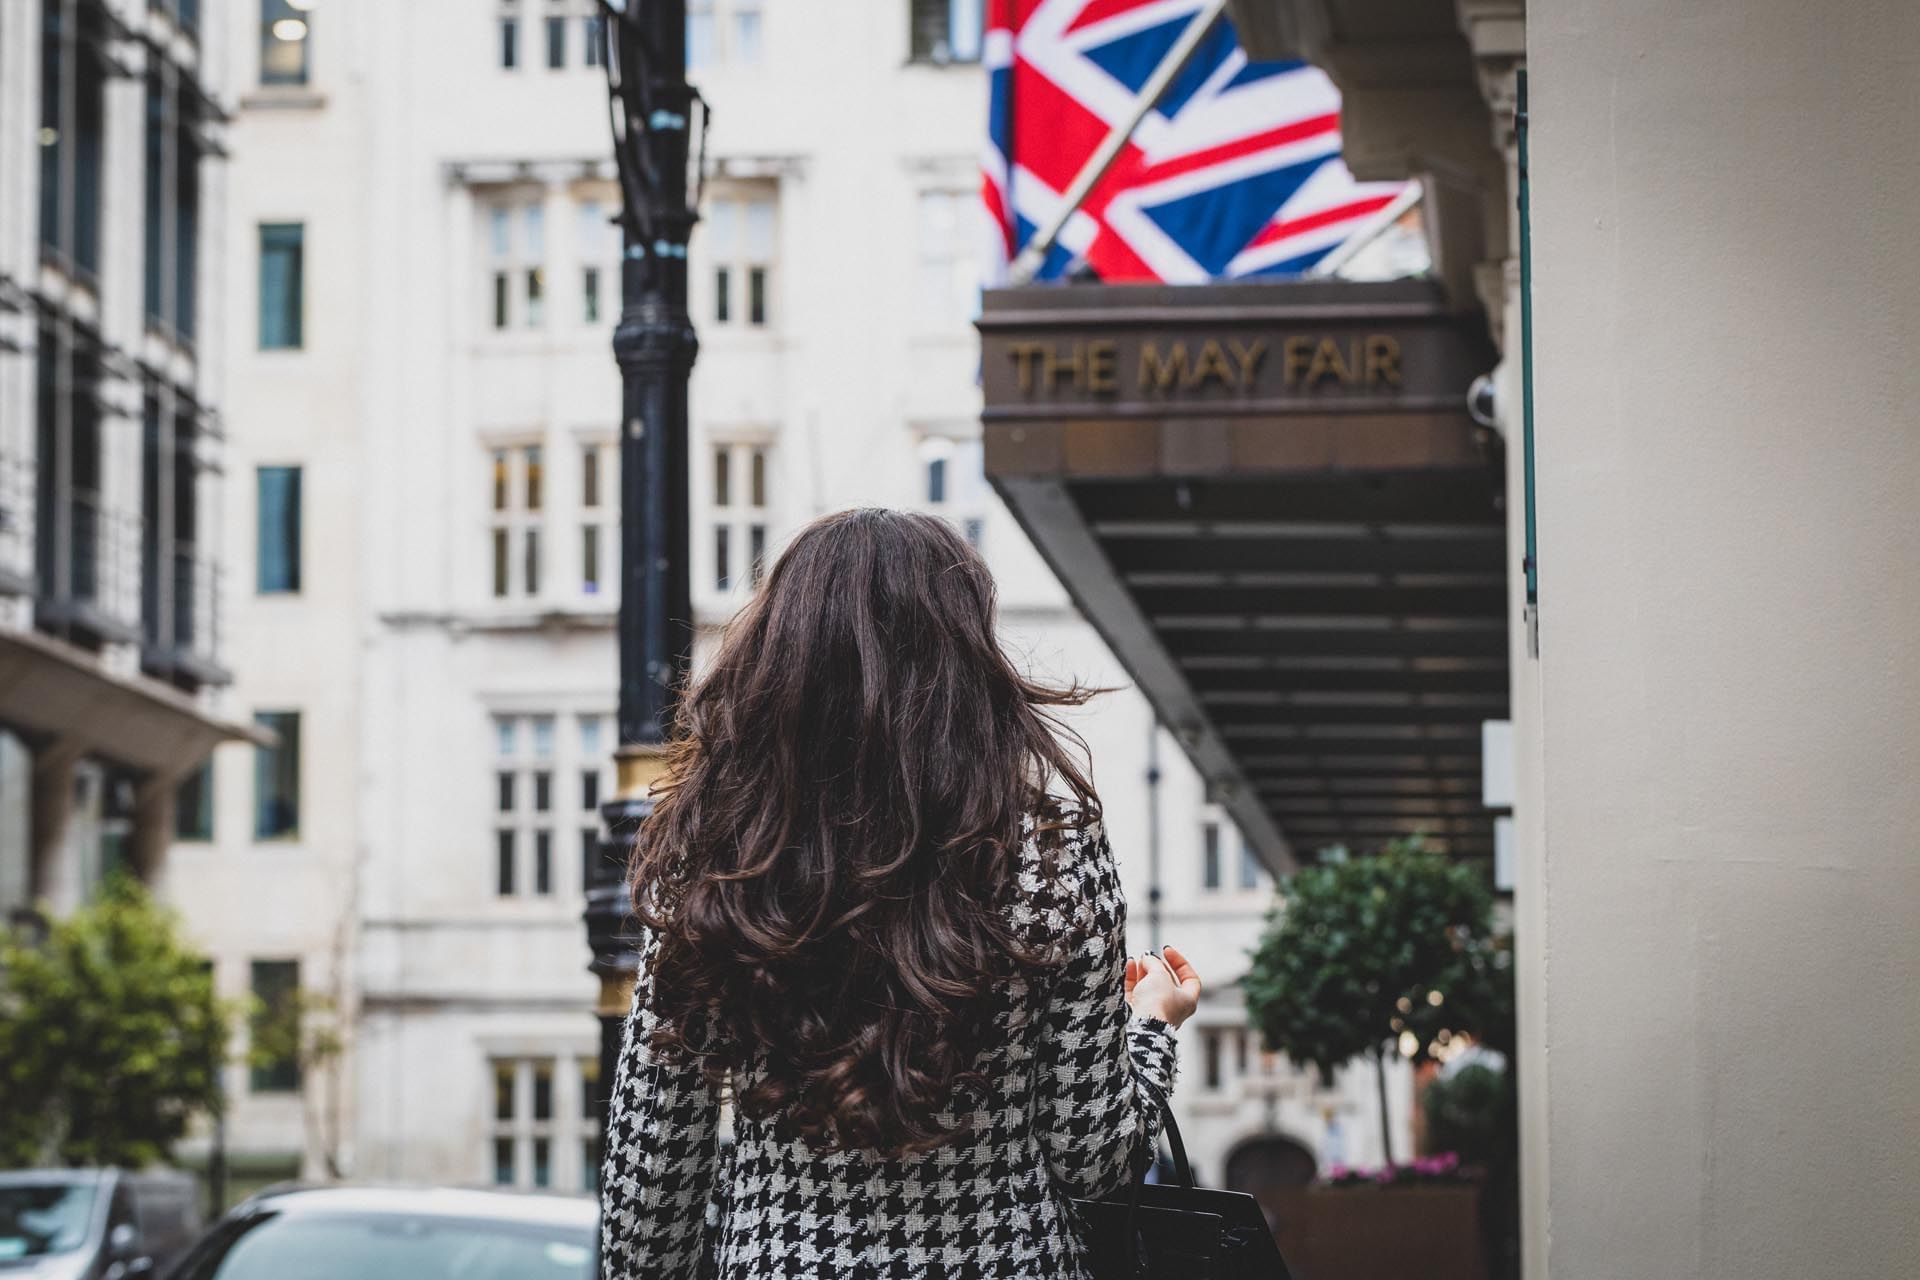 Close up of a girl walking near The May Fair Hotel London